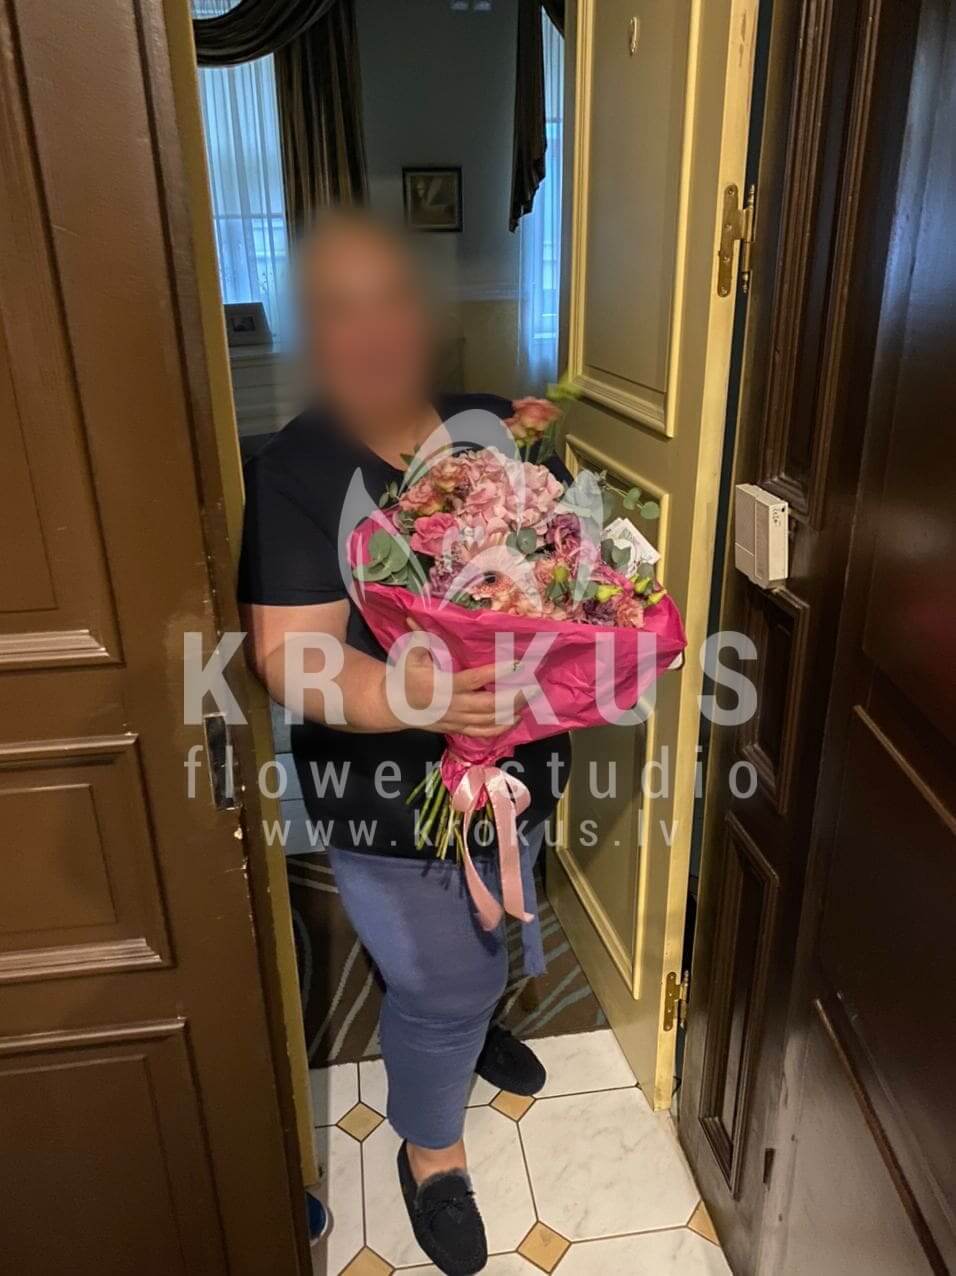 Deliver flowers to Rīga (celosiapink rosesgum treebouvardiahydrangeas)